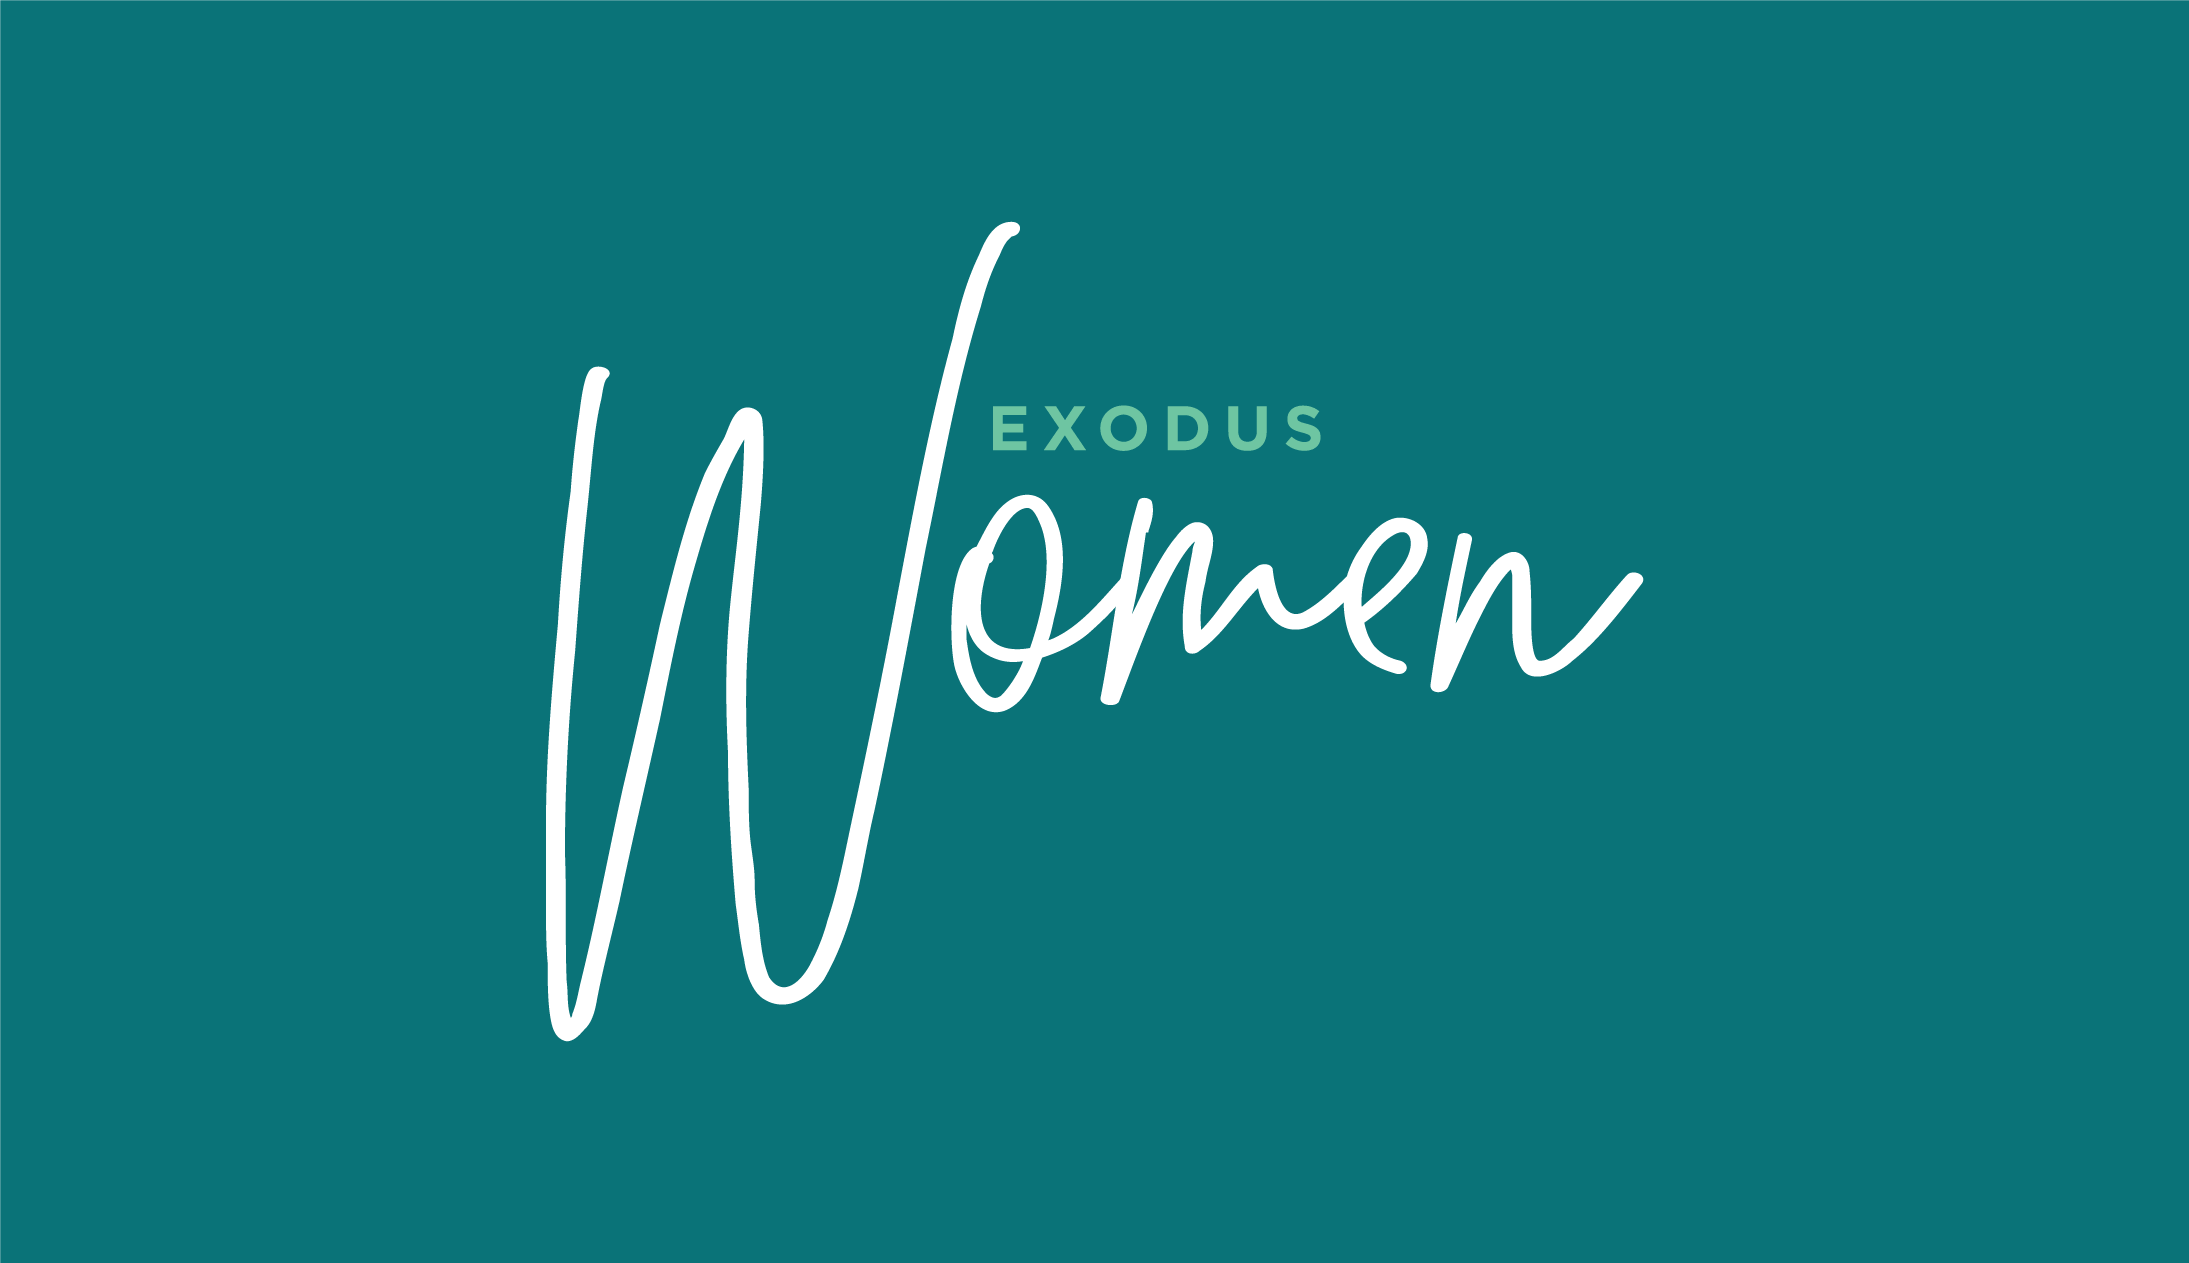 Exodus Women – The Vision